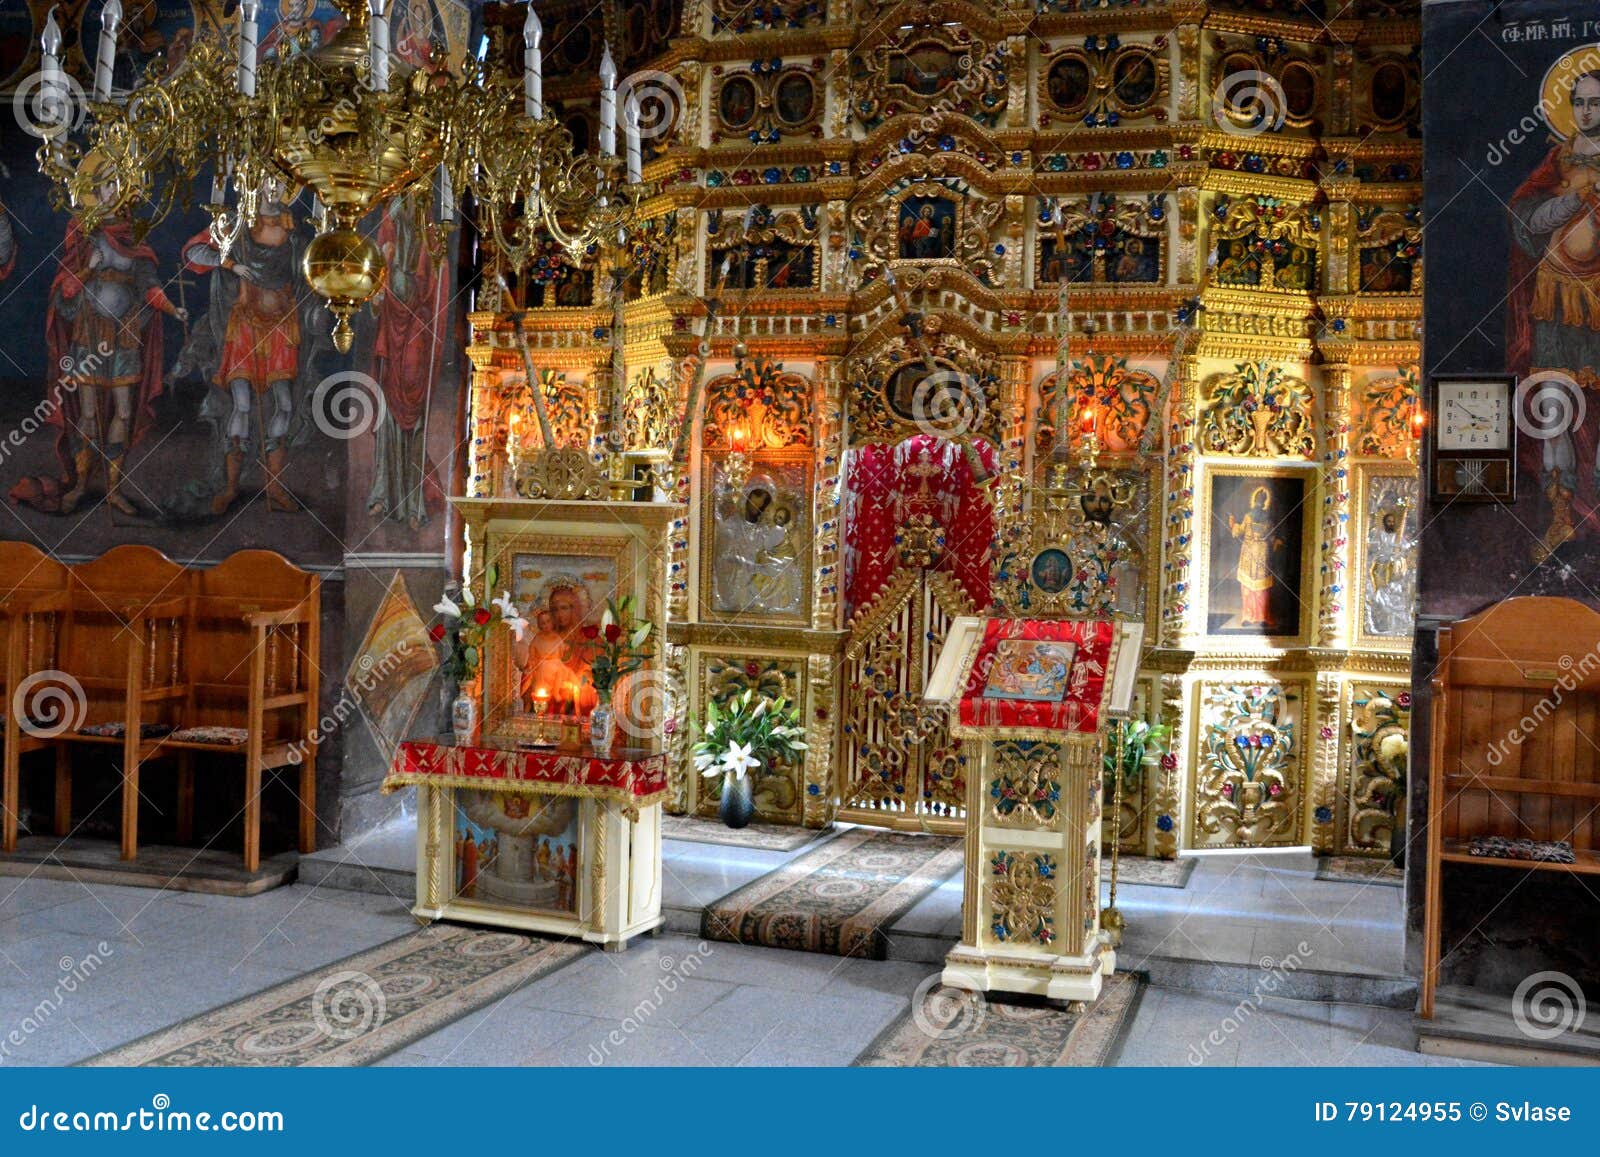 inside church of cheia monastery, romania